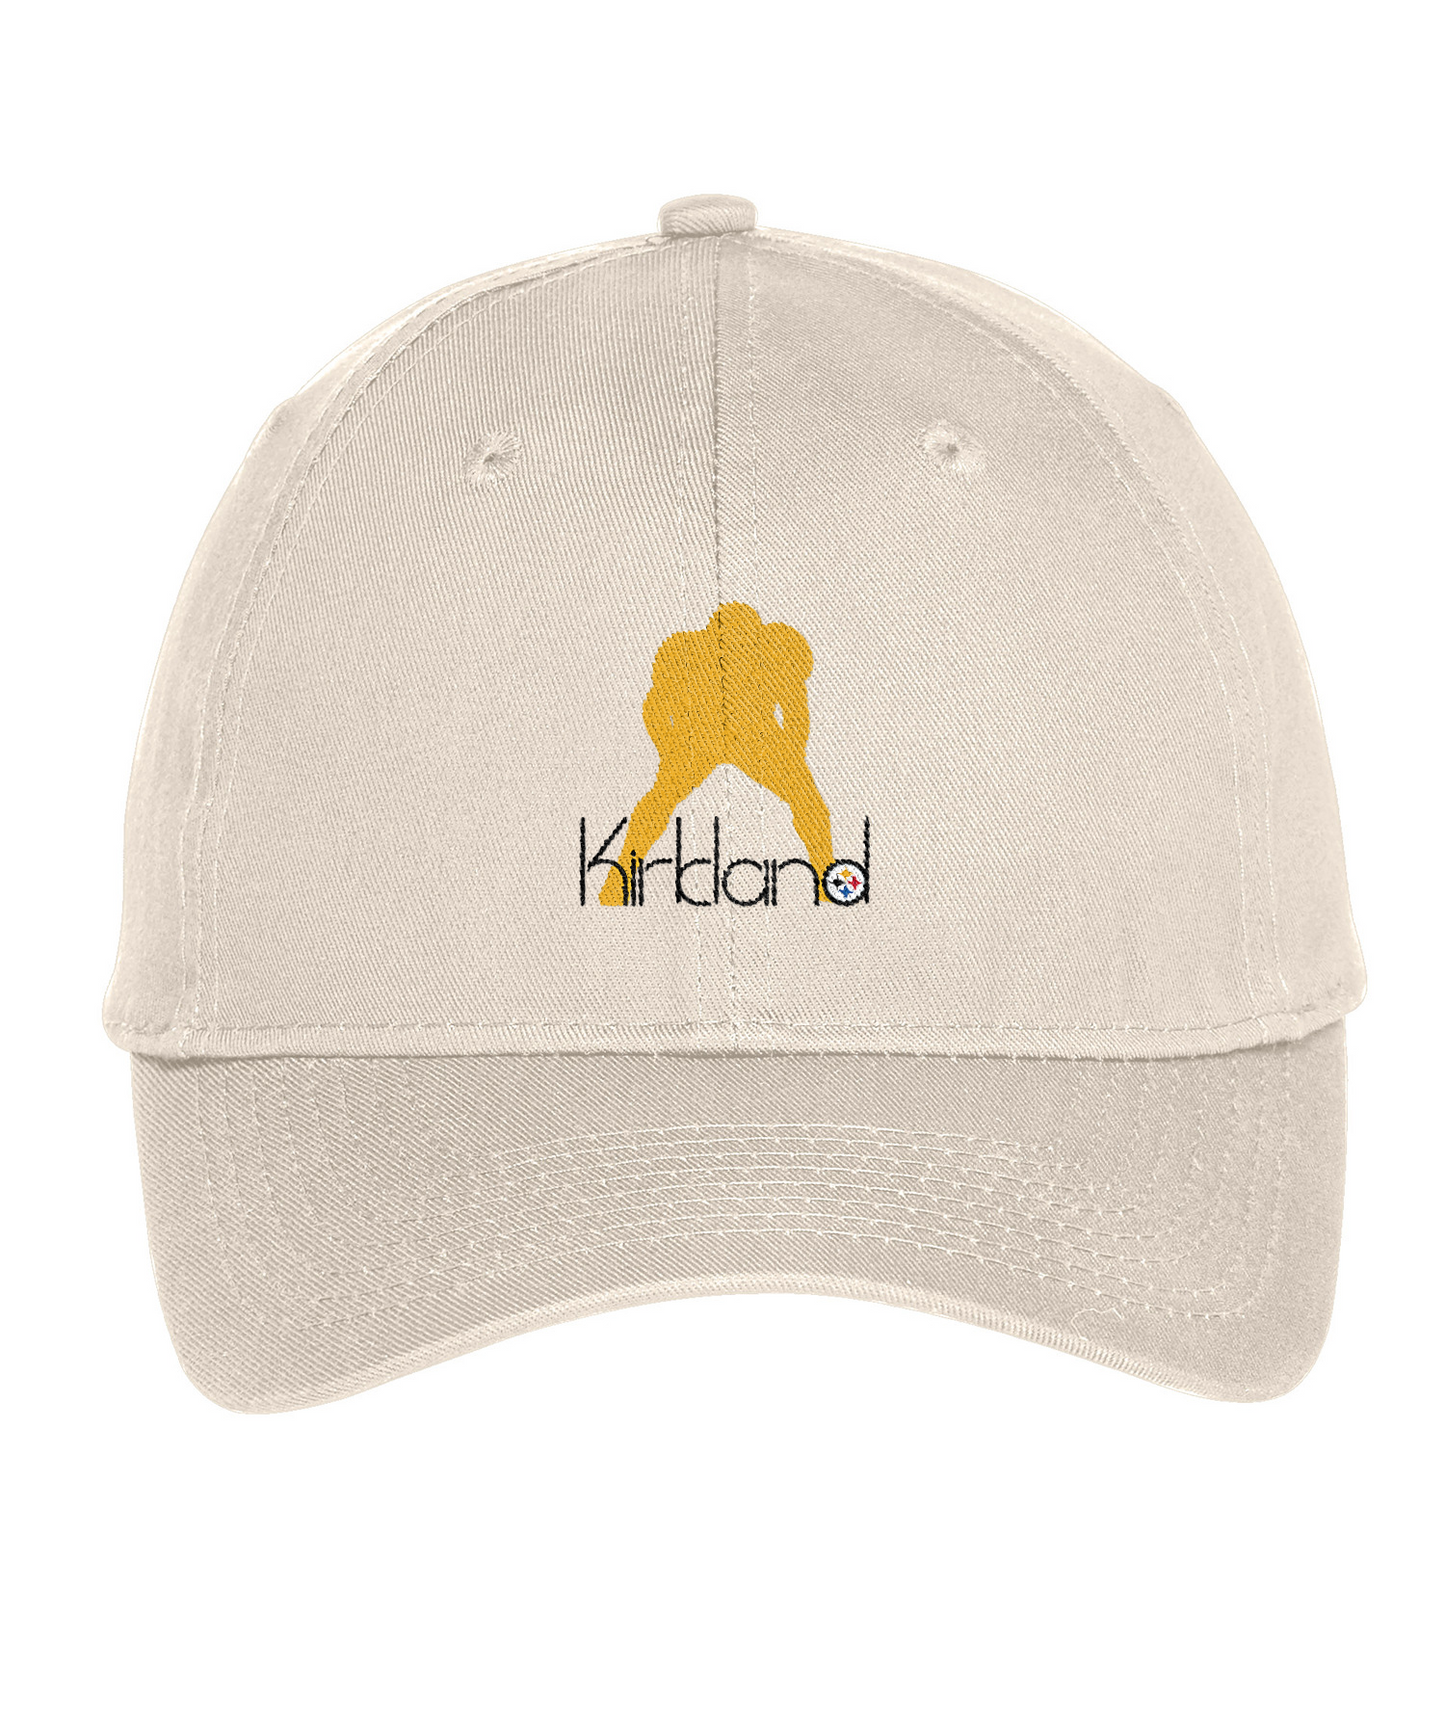 GT Kirkland Embroidered Twill Cap